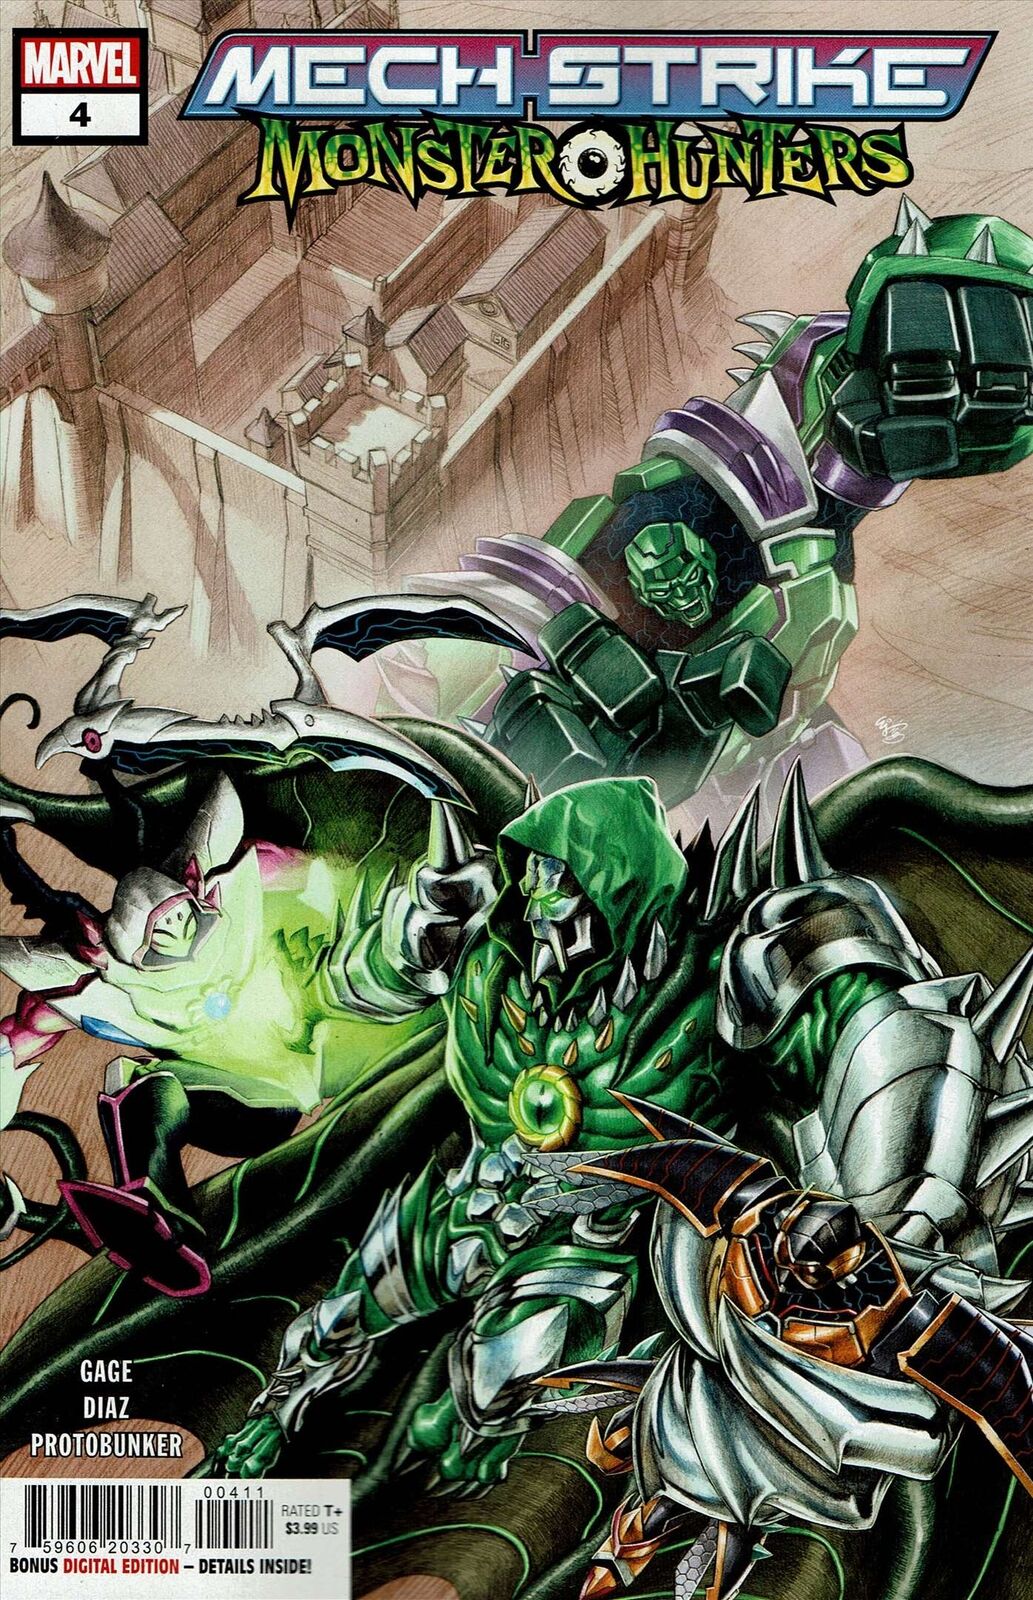 Mech Strike: Monster Hunters #4 VF/NM; Marvel | Doctor Doom - we combine shippin